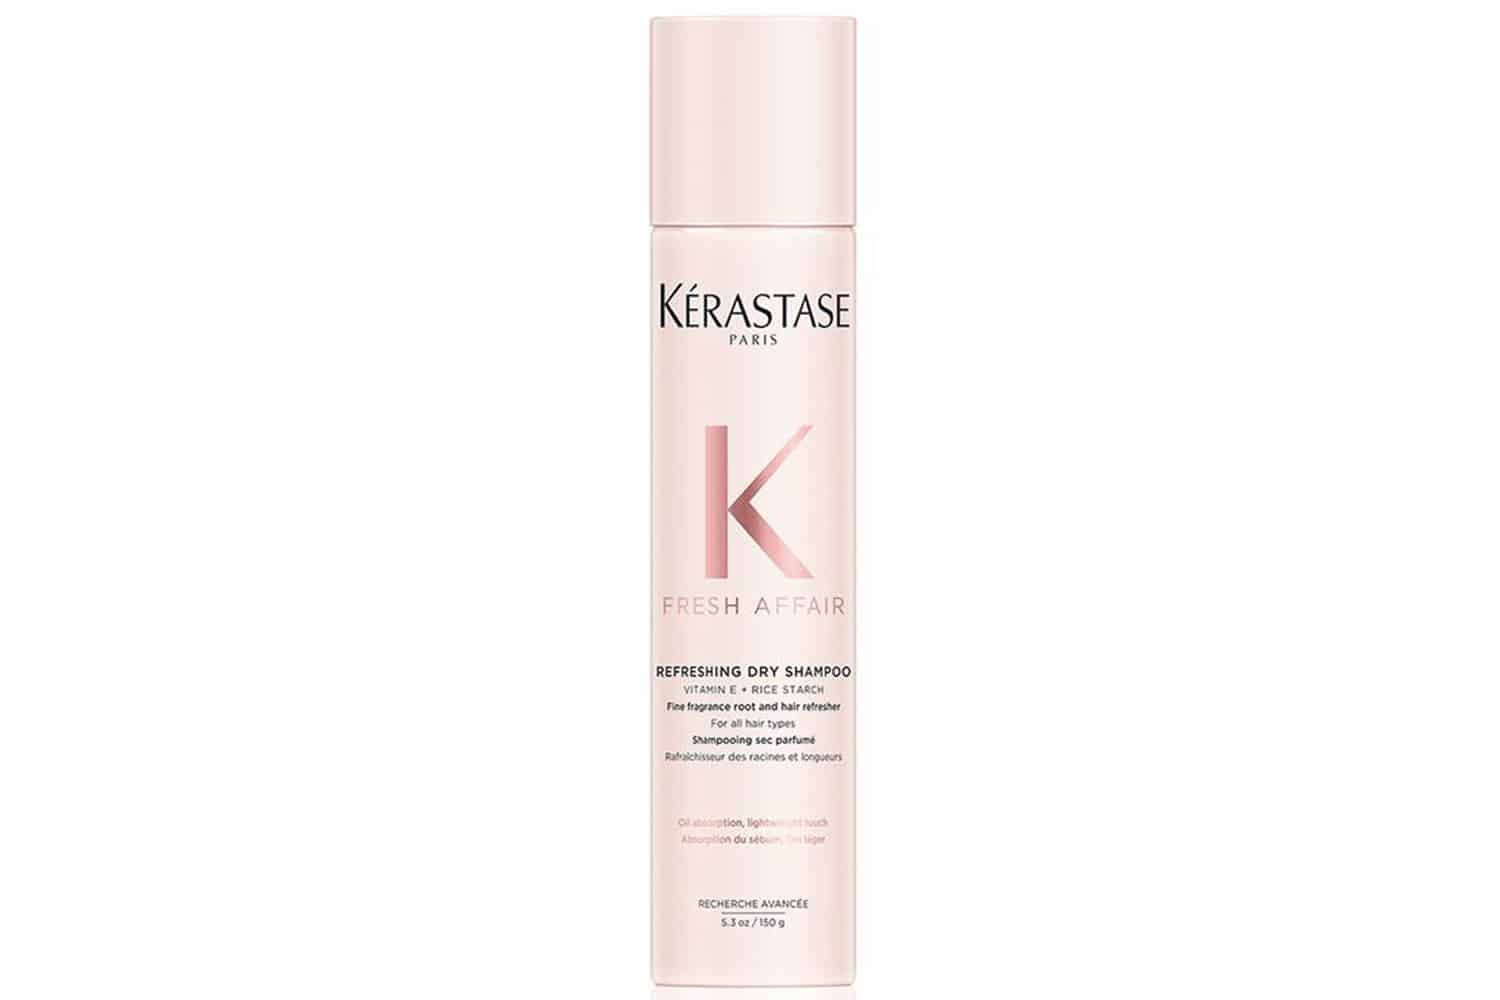 Editor's Pick: Kérastase Fresh Affair Dry Shampoo